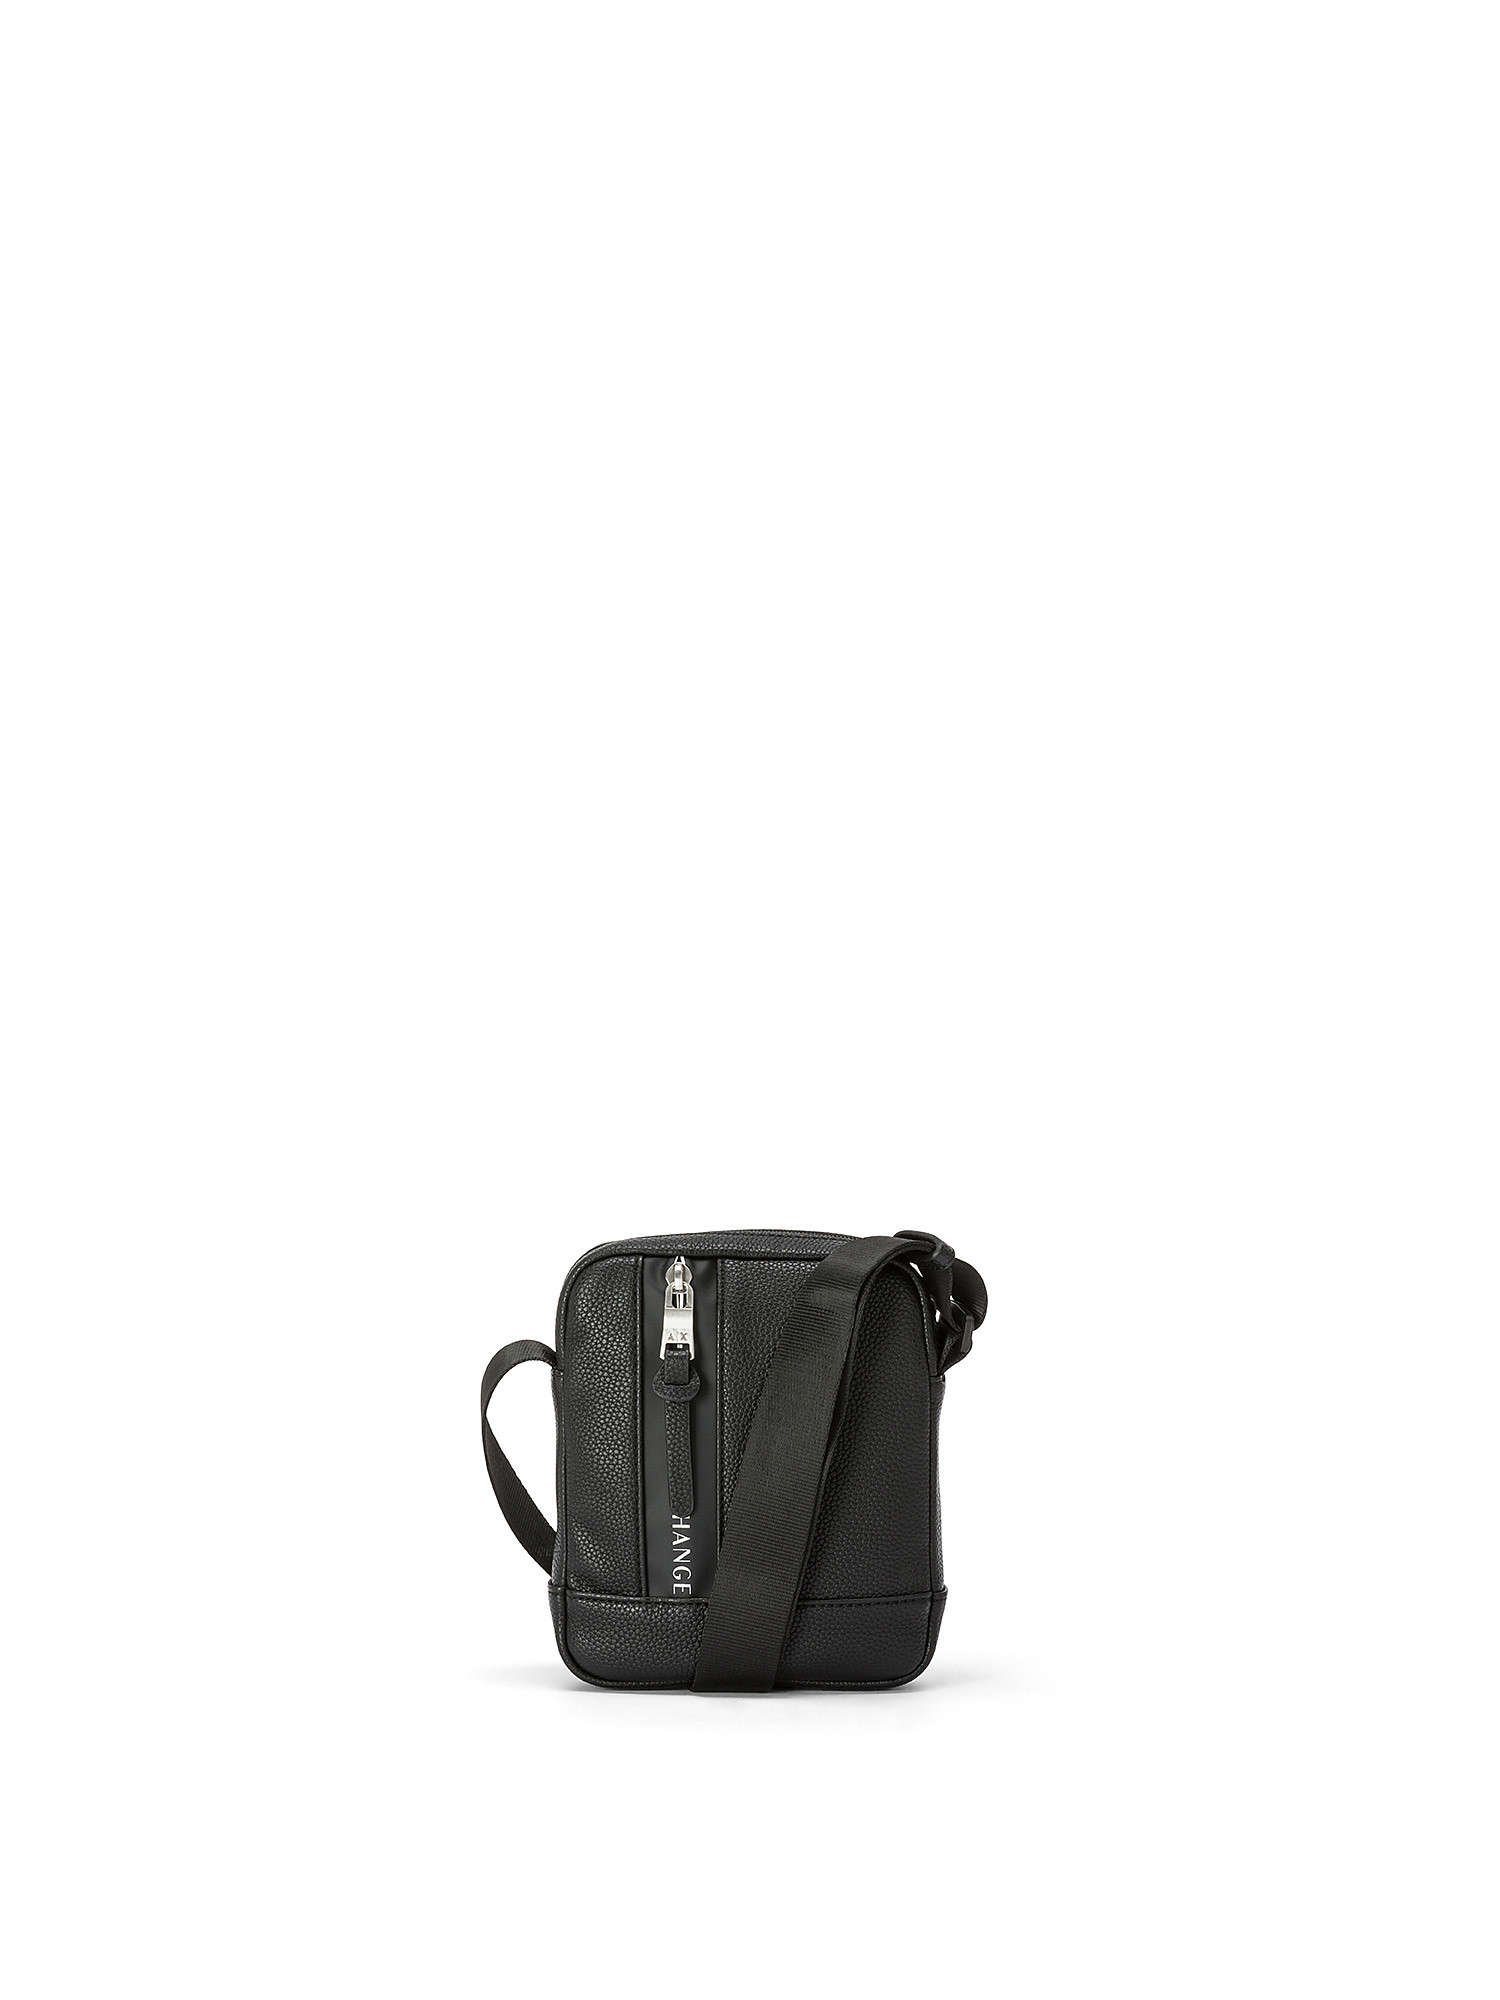 Armani Exchange - Bag with logo, Black, large image number 0